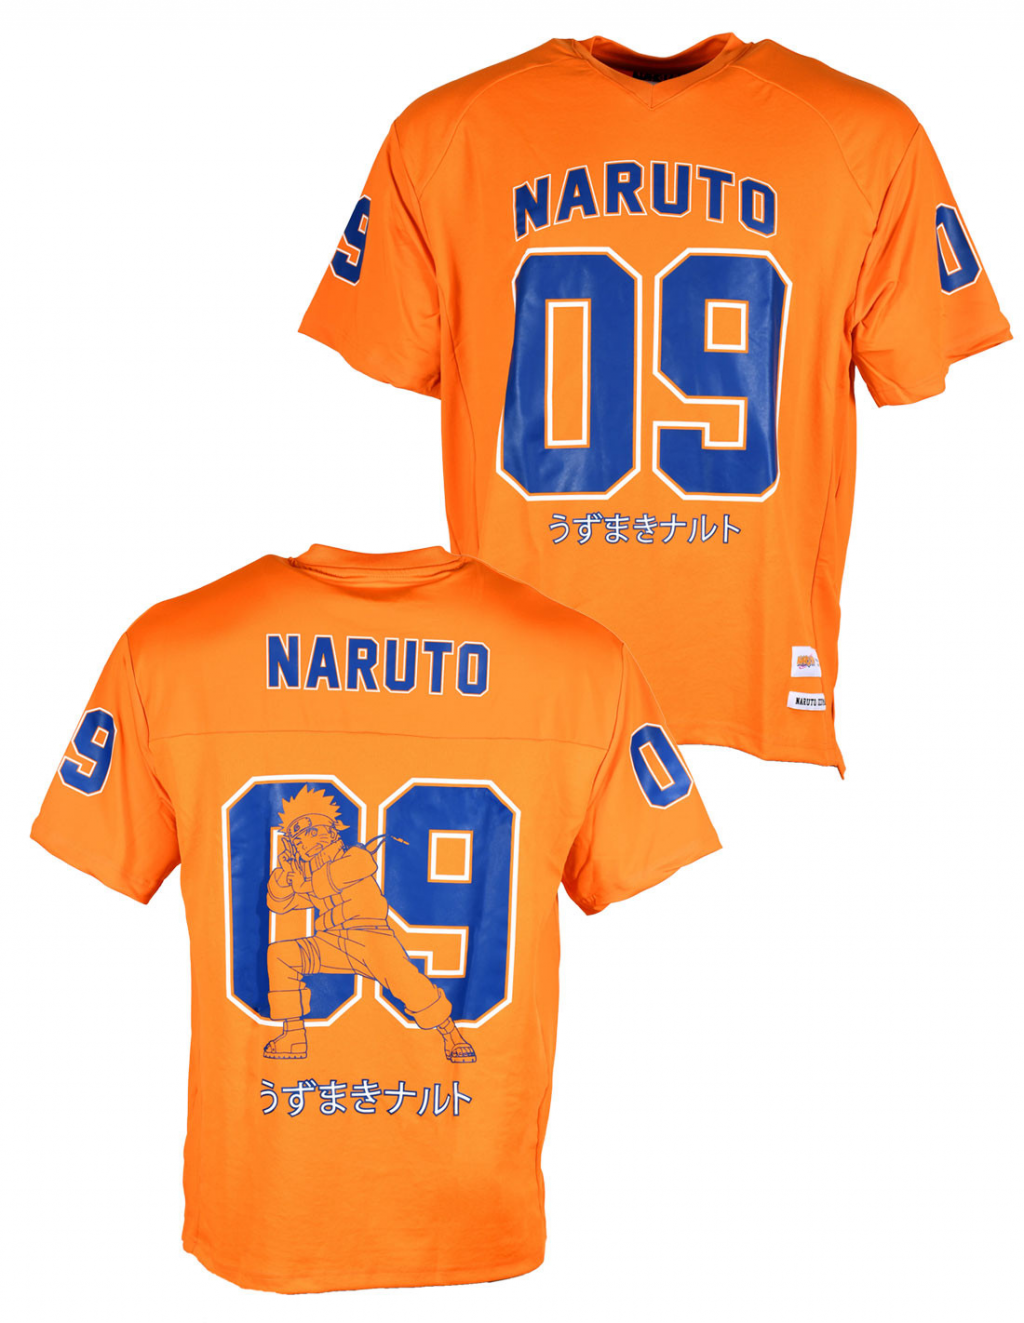 NARUTO - Naruto Uzumaki - T-Shirt Sports US Replica unisex (XXL)